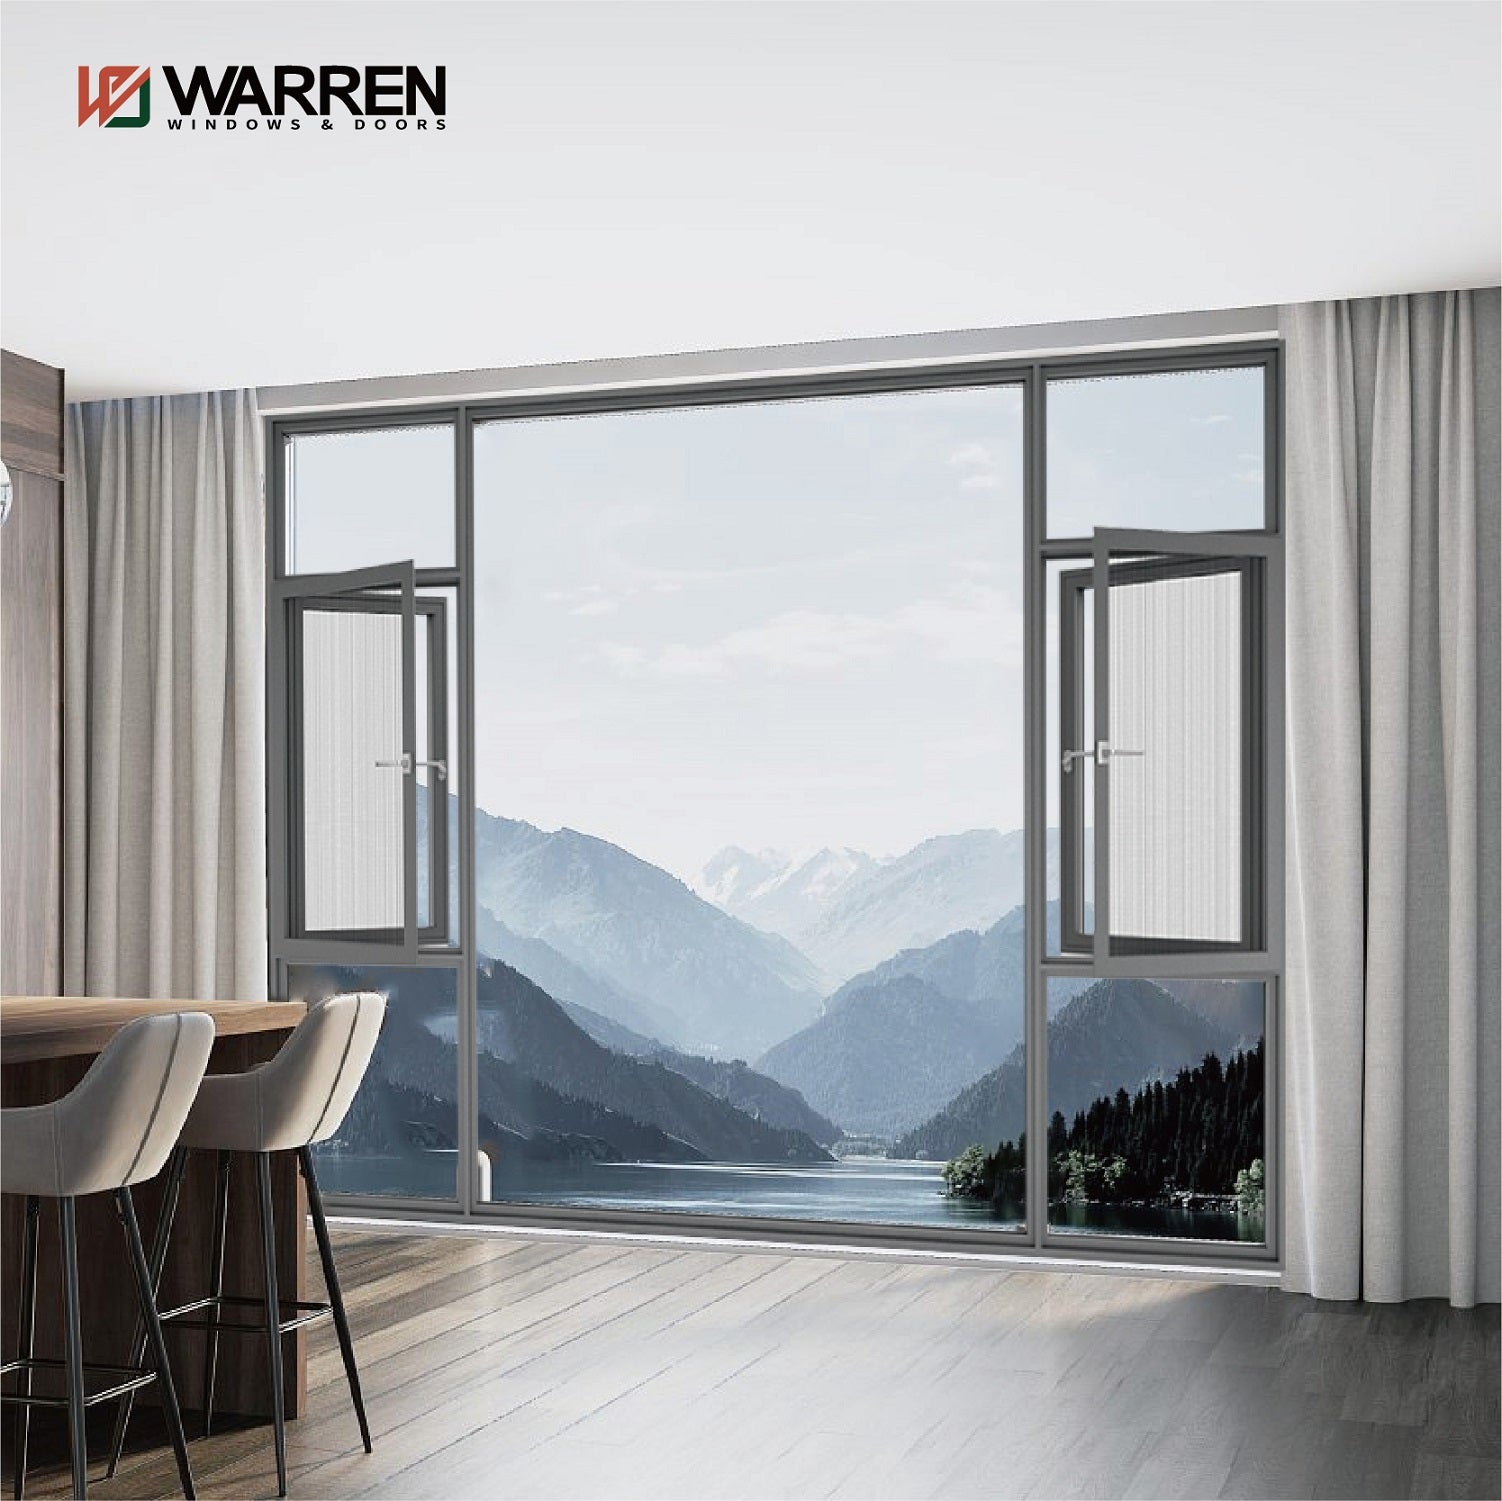 Warren Good Product Cheap Aluminum Window Hot Sale Window Grill Design Security Mosquito Screen Windows